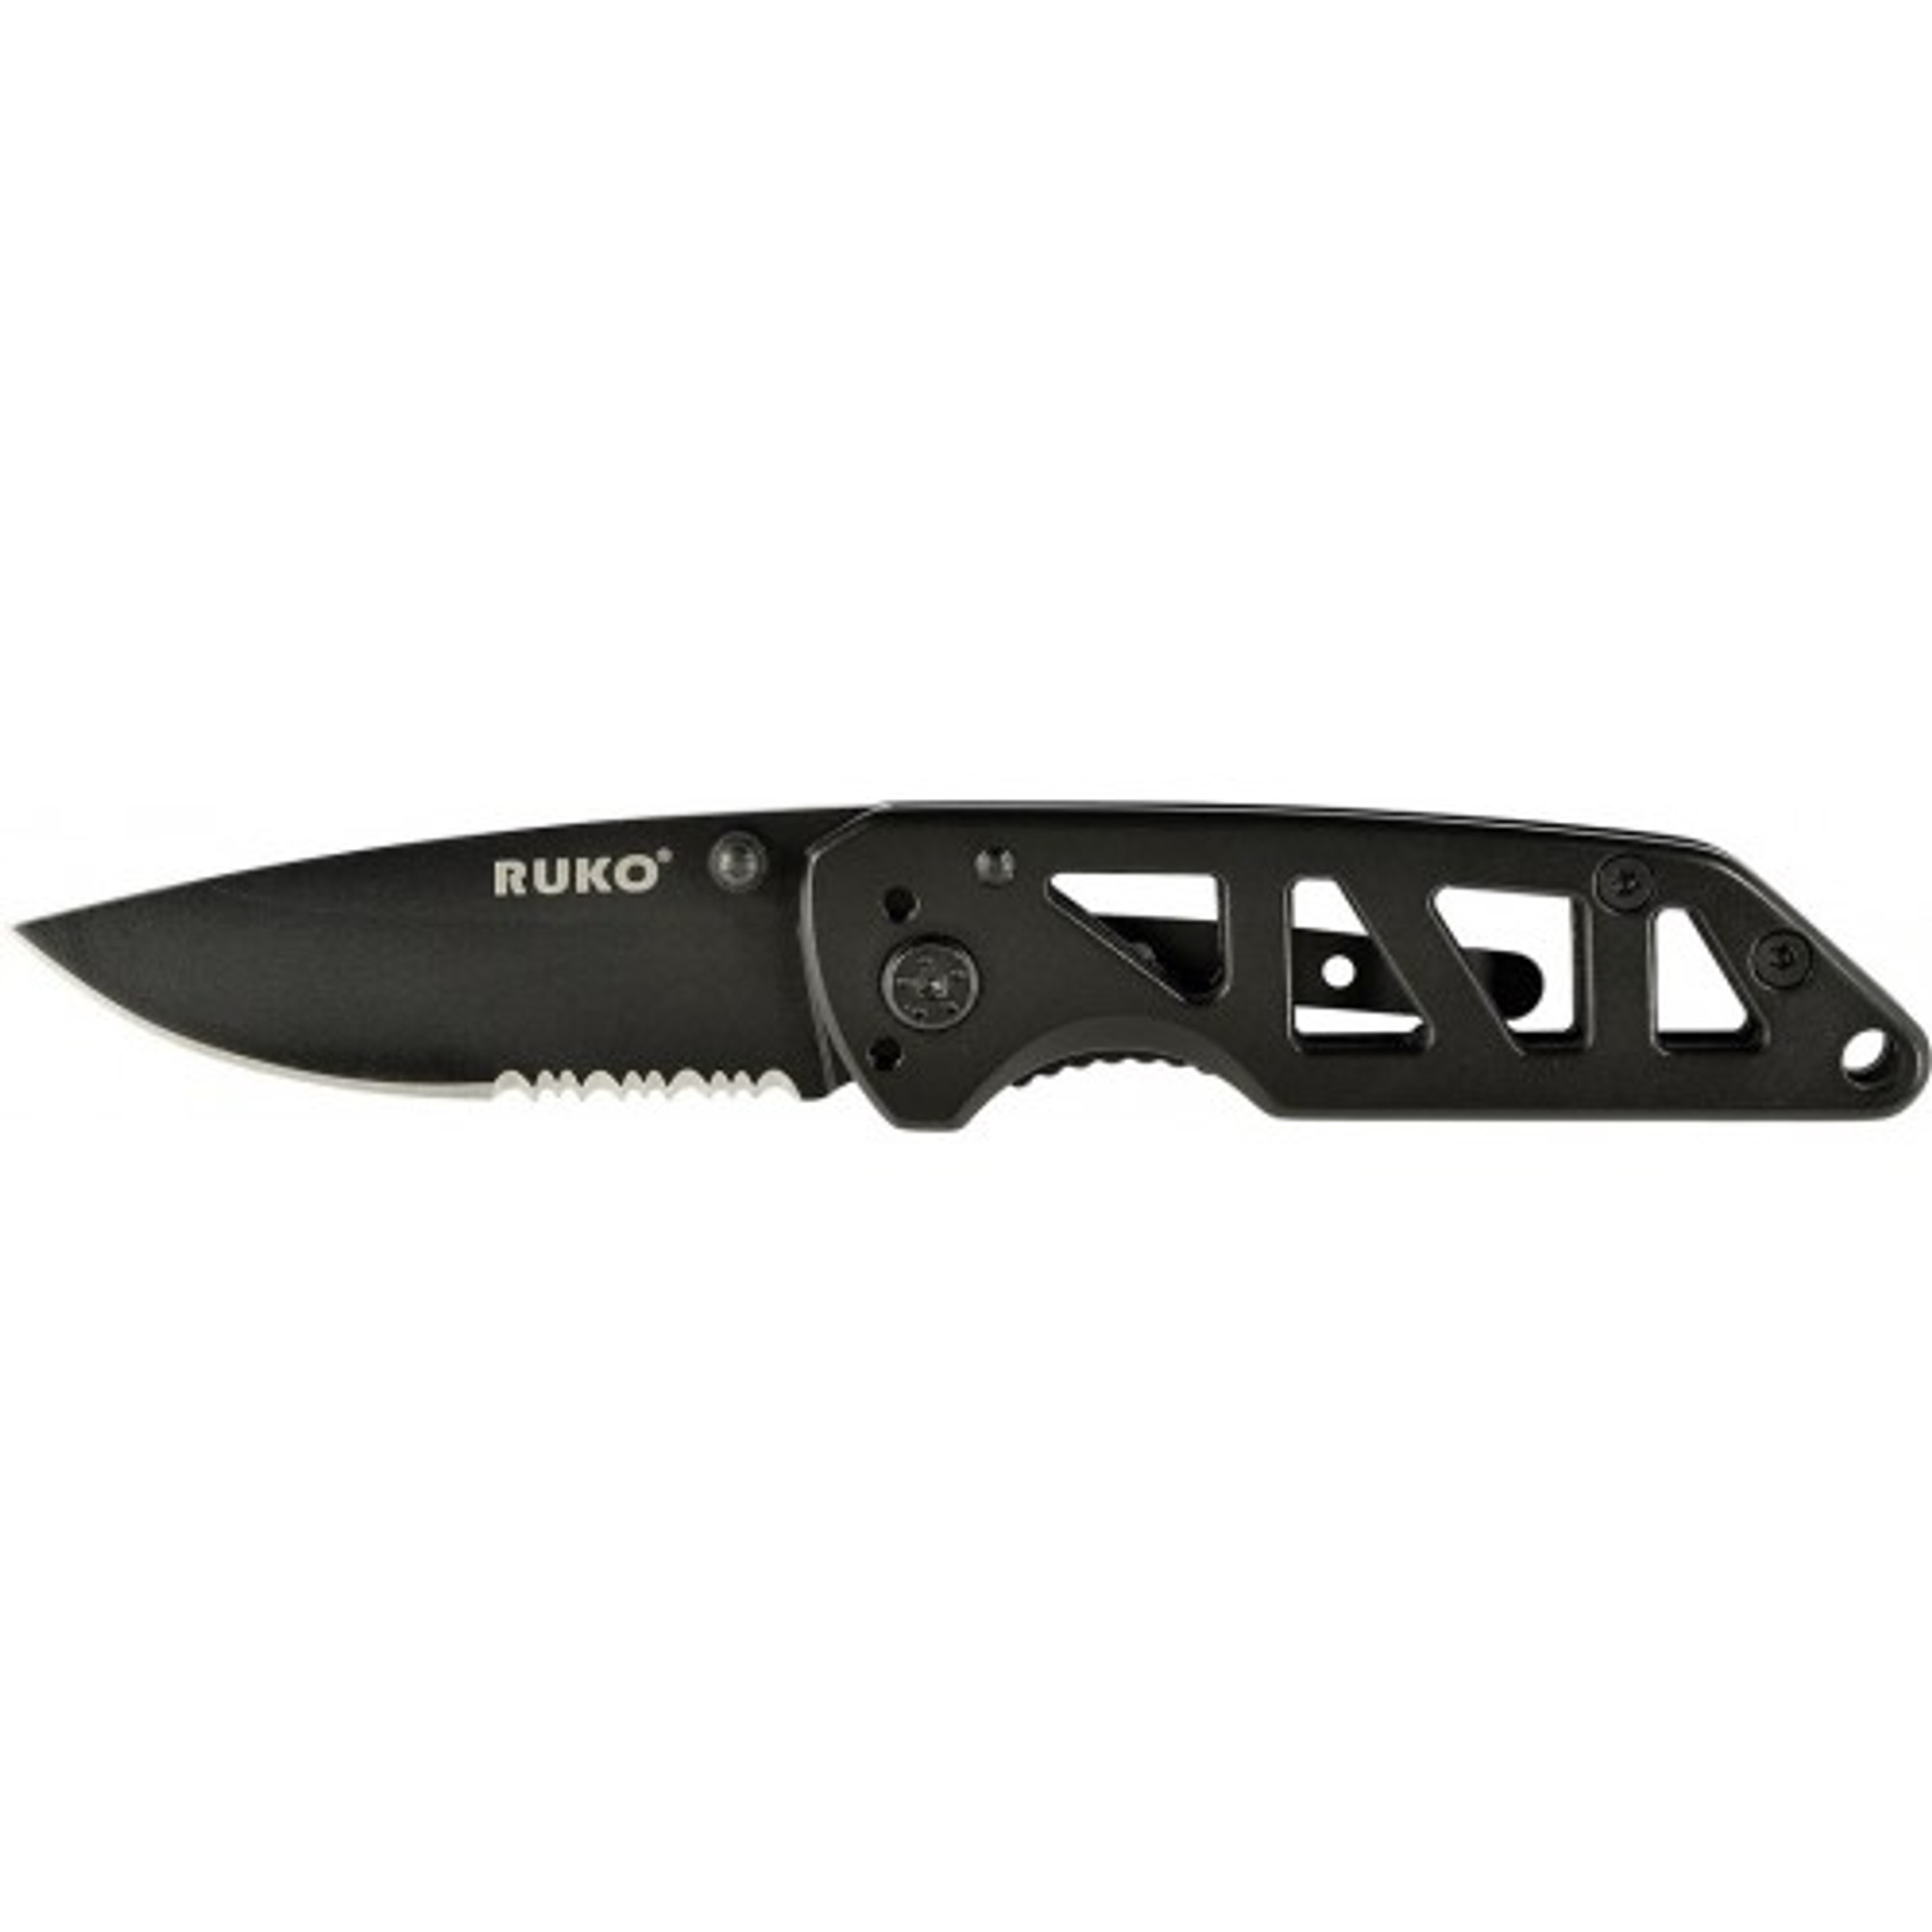 RUKO RUK0162, 440A TiN, 2-1/2" Folding Blade Ti-Tactical Knife, Black Titanium Nitride Coated Vented Handle, boxed